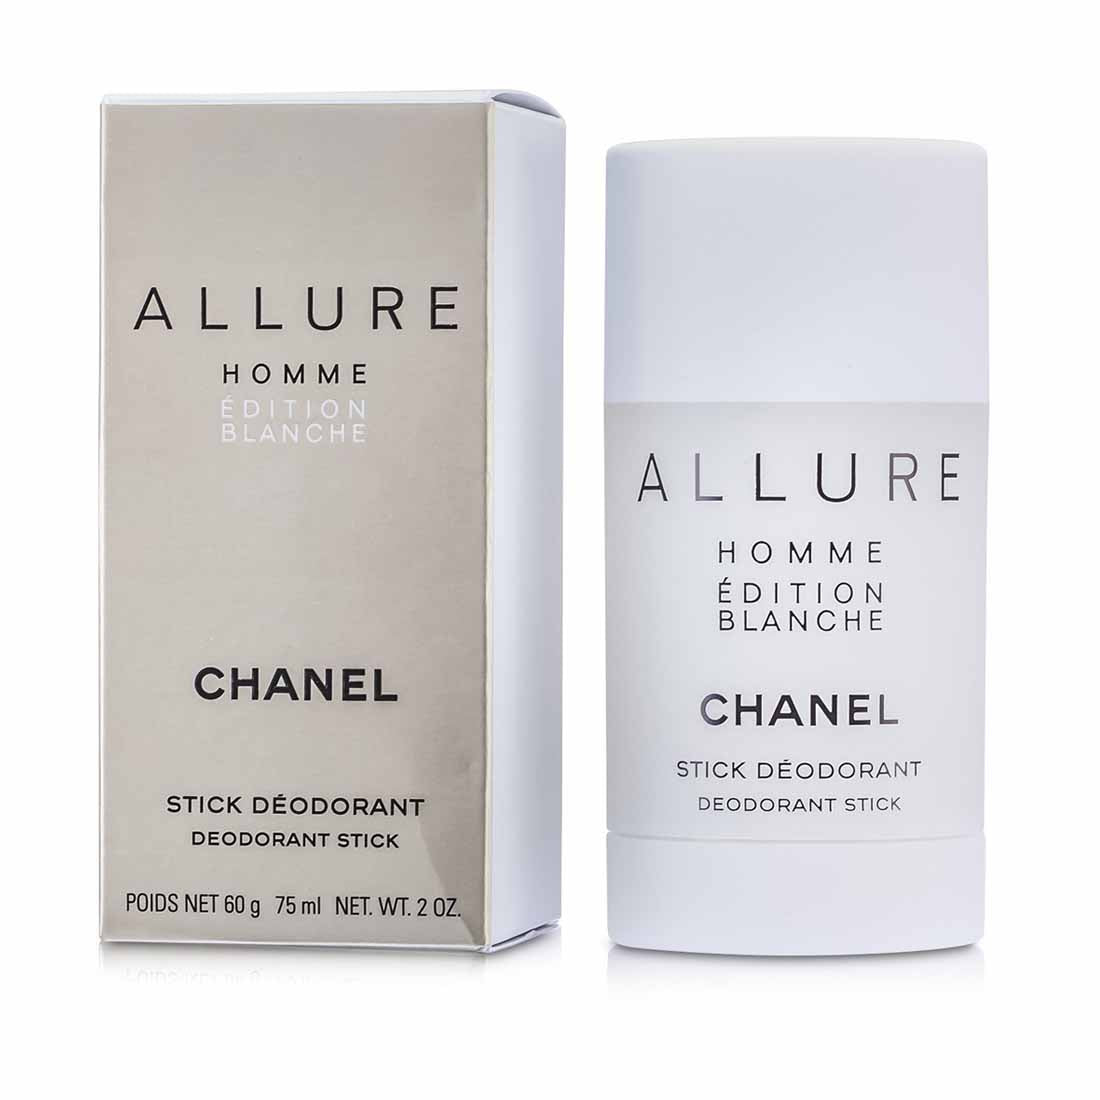 Chanel Allure Homme Sport for Men, 2 Ounce